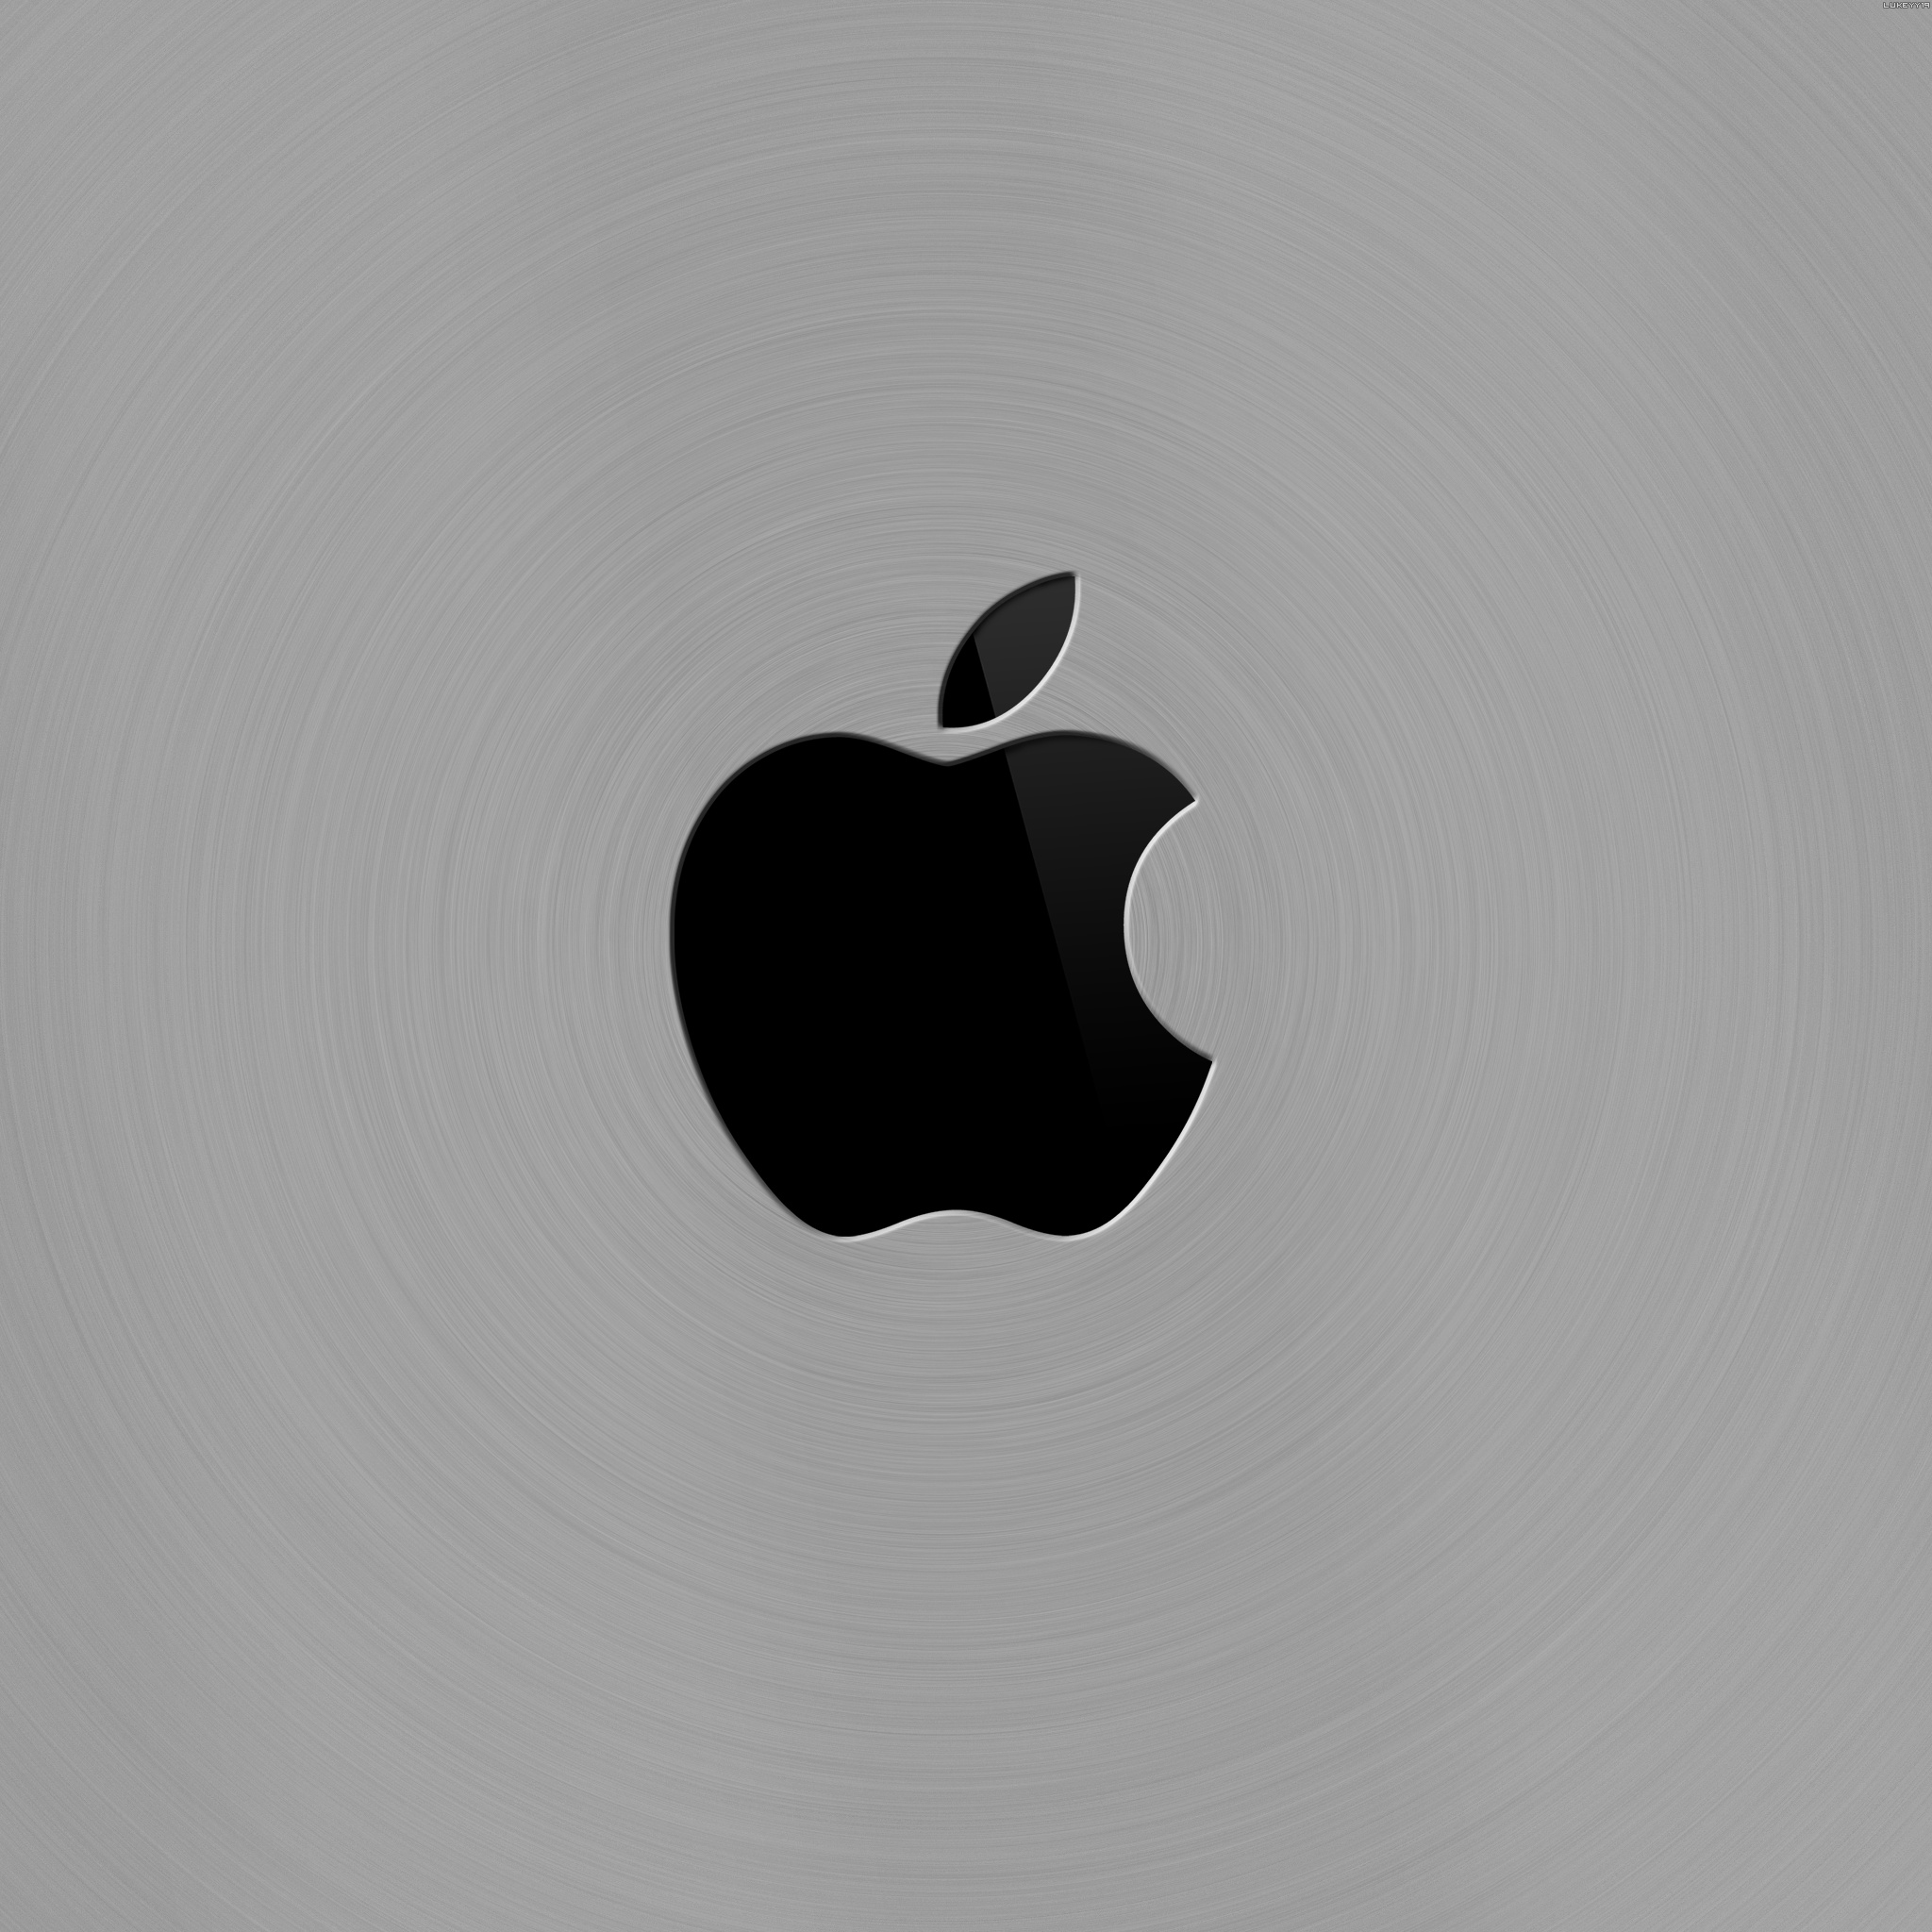 iPad 3 Wallpaper Apple Logo 06 | iPad Air Wallpapers, iPad Air ...